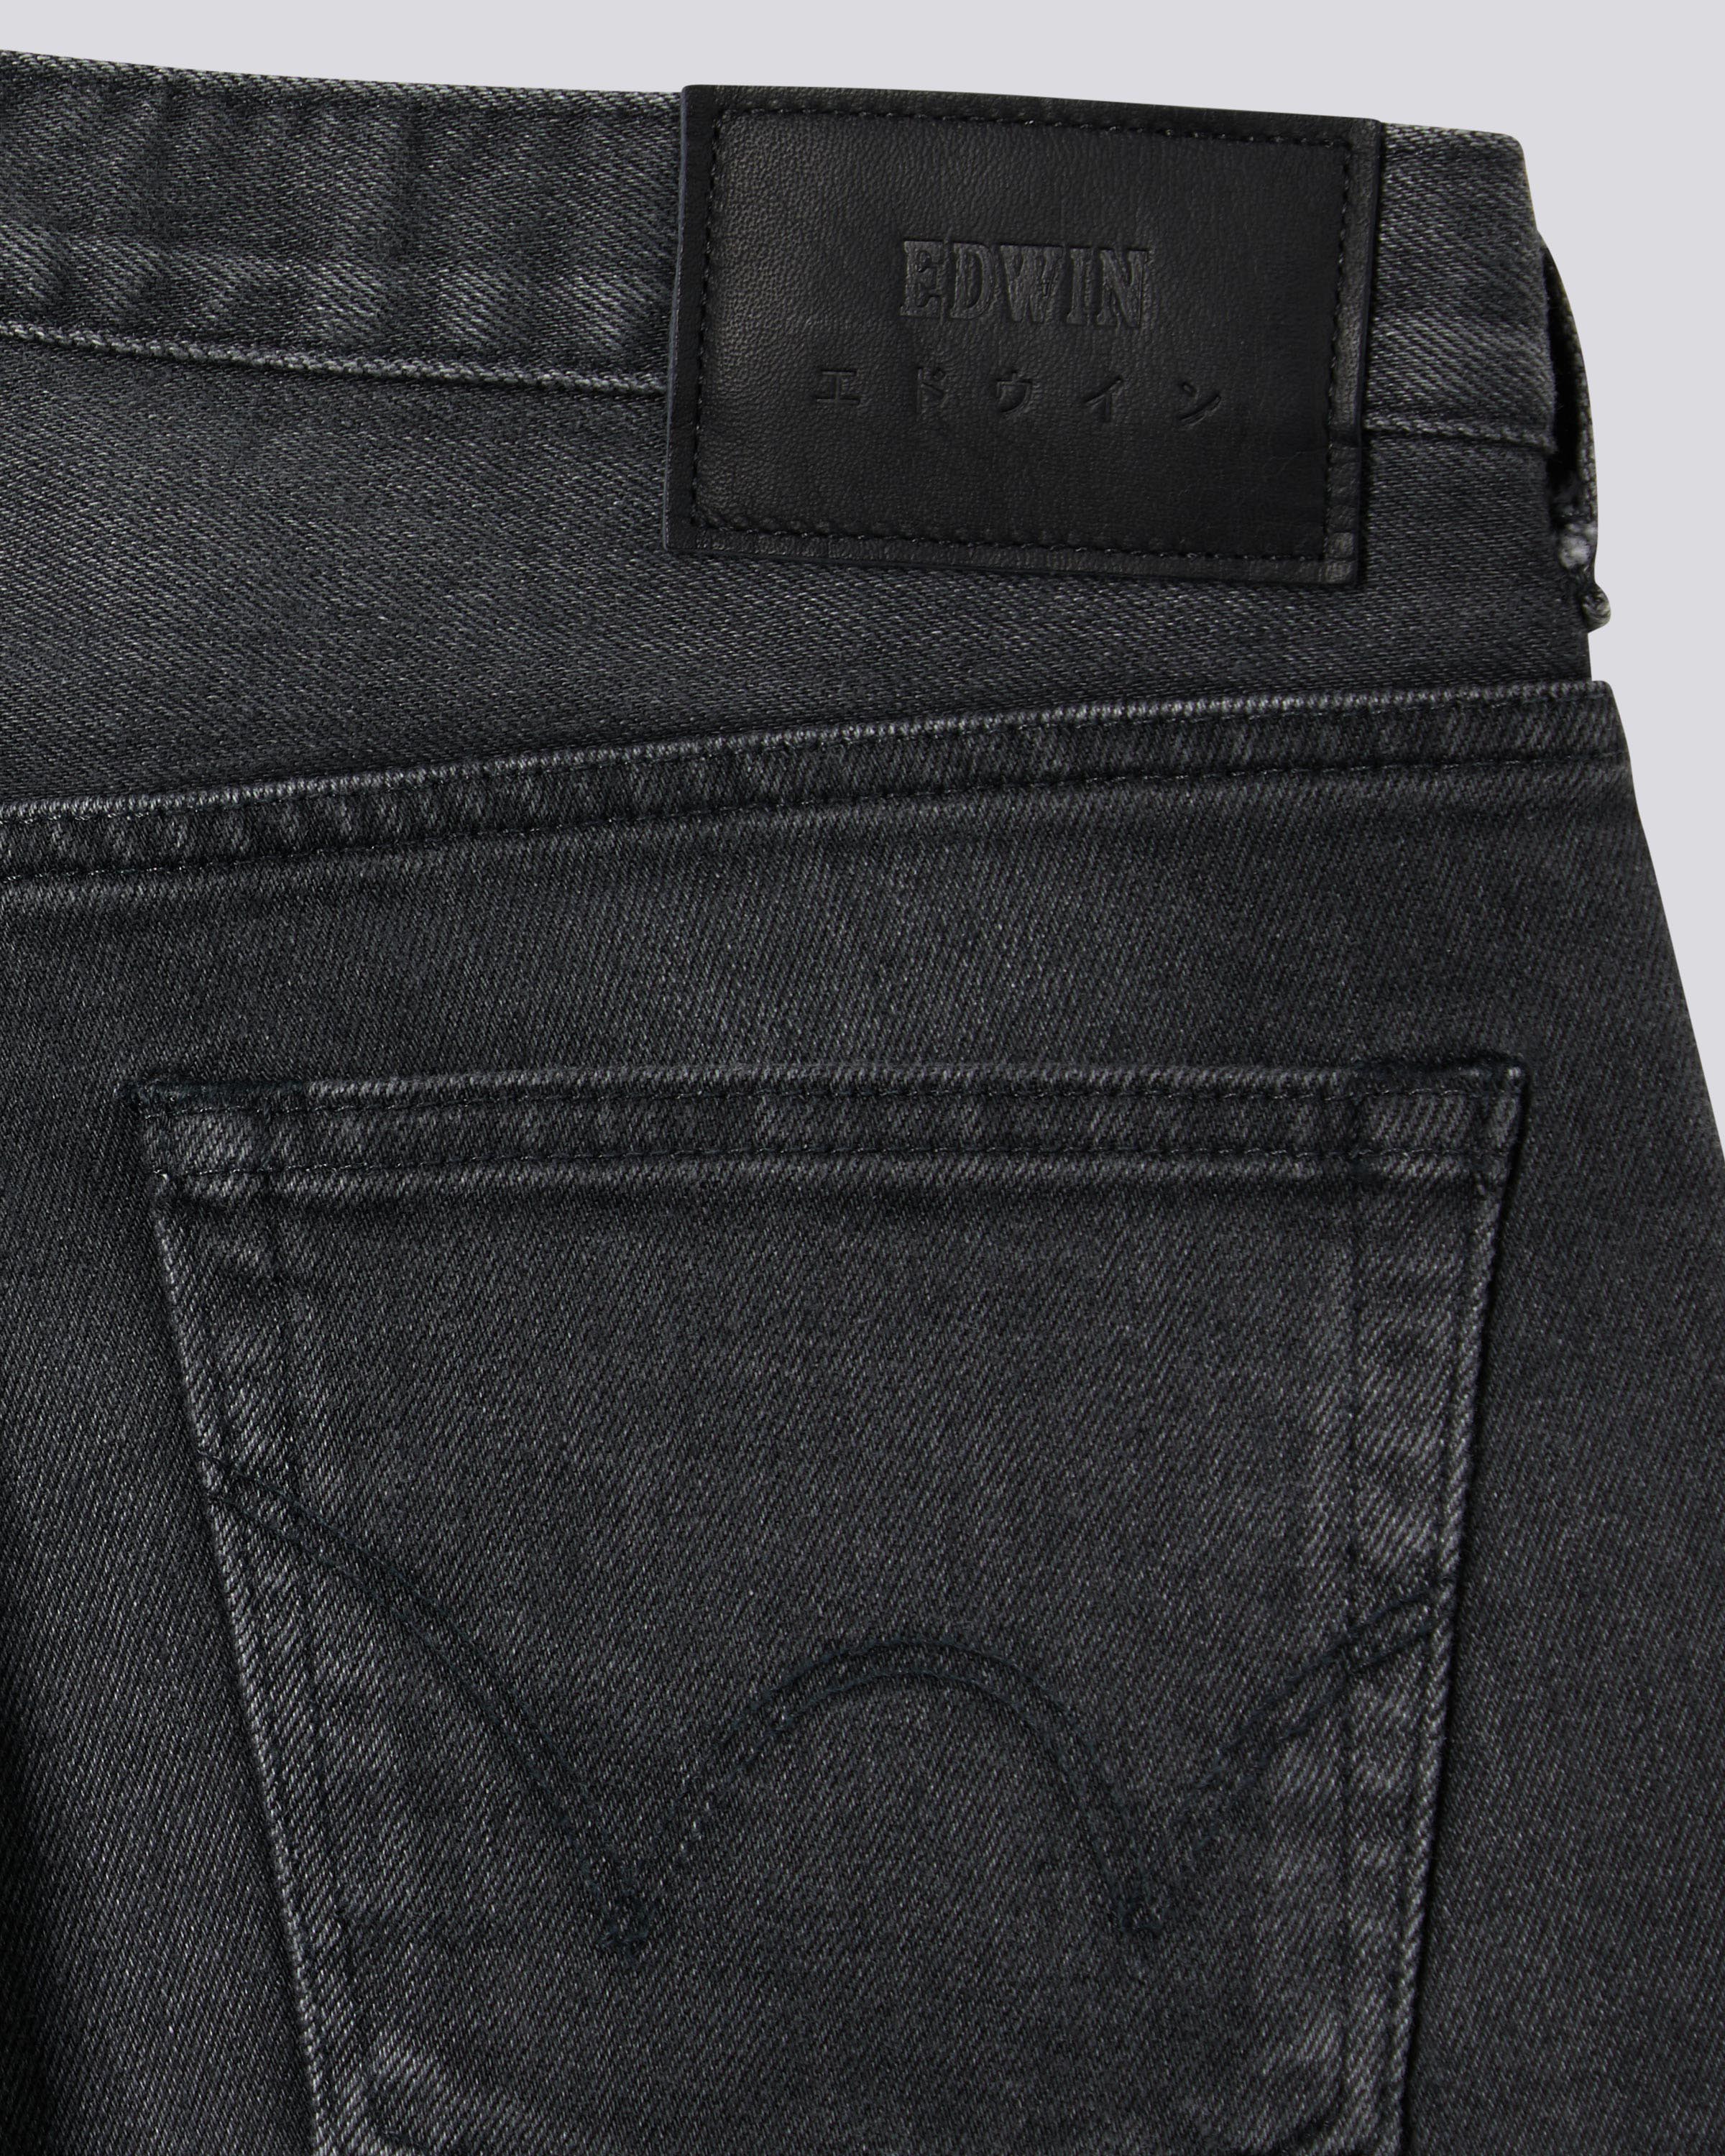 black slim fit tapered jeans